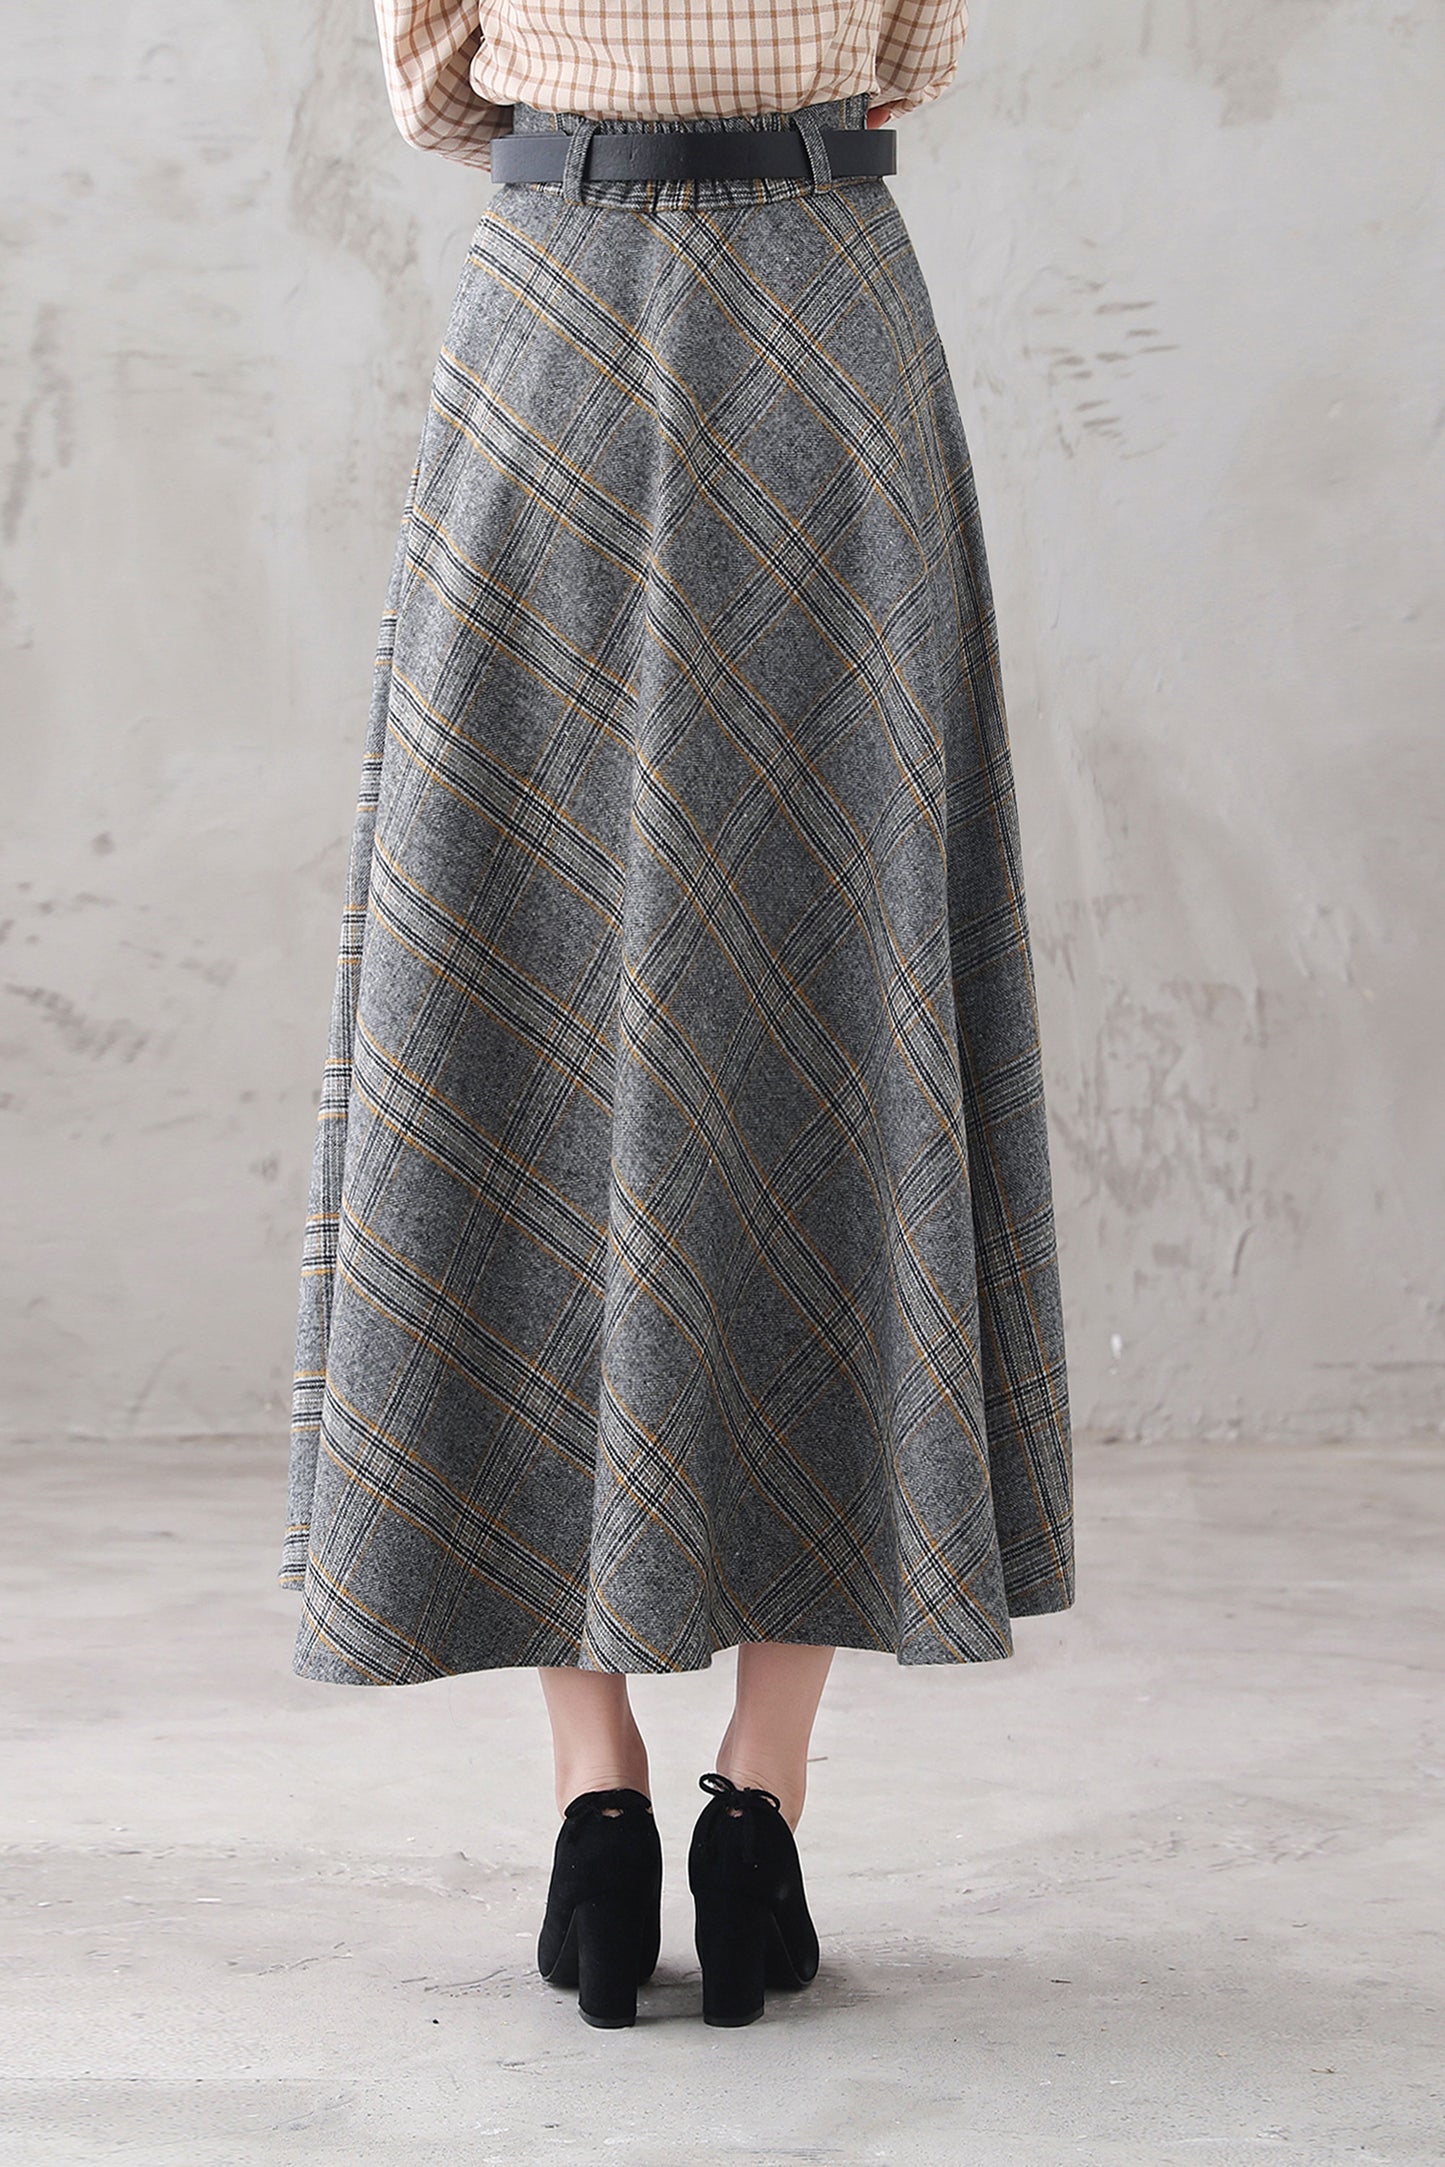 Vintage Inspired High Waist Tartan Skirt 3293